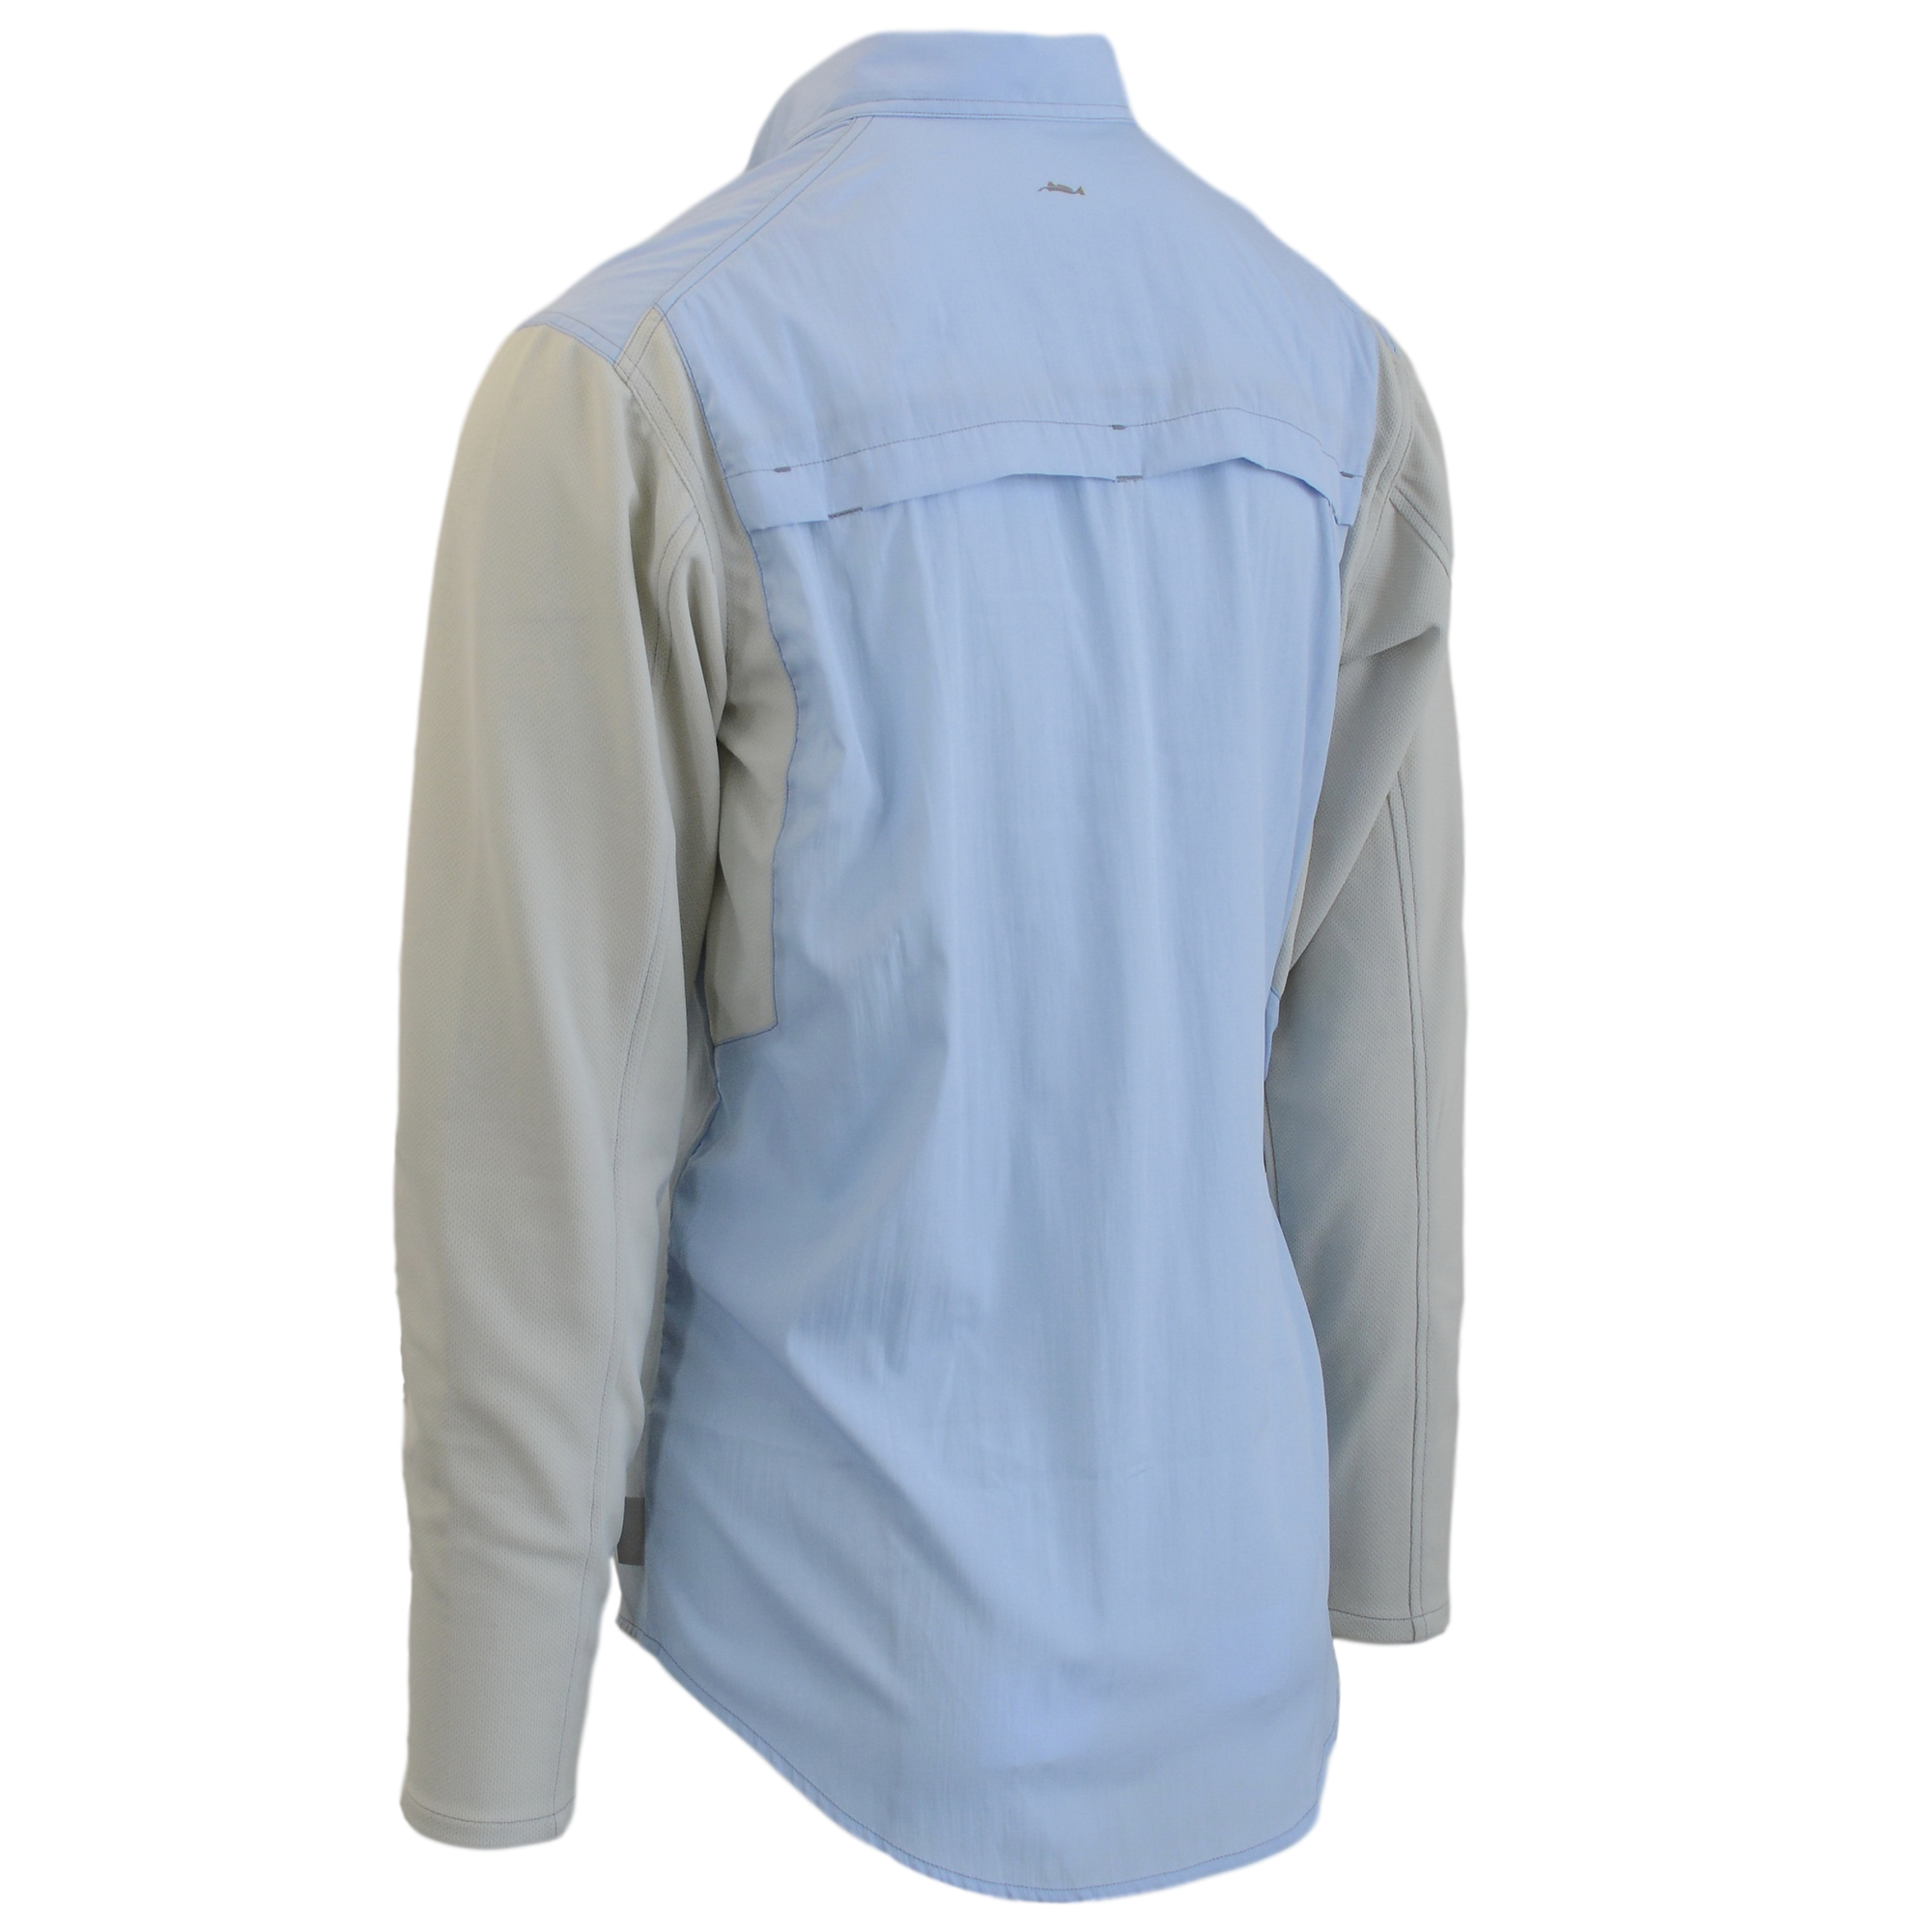 Fishing shirt with push up sleeves - Dagon Apparel Company